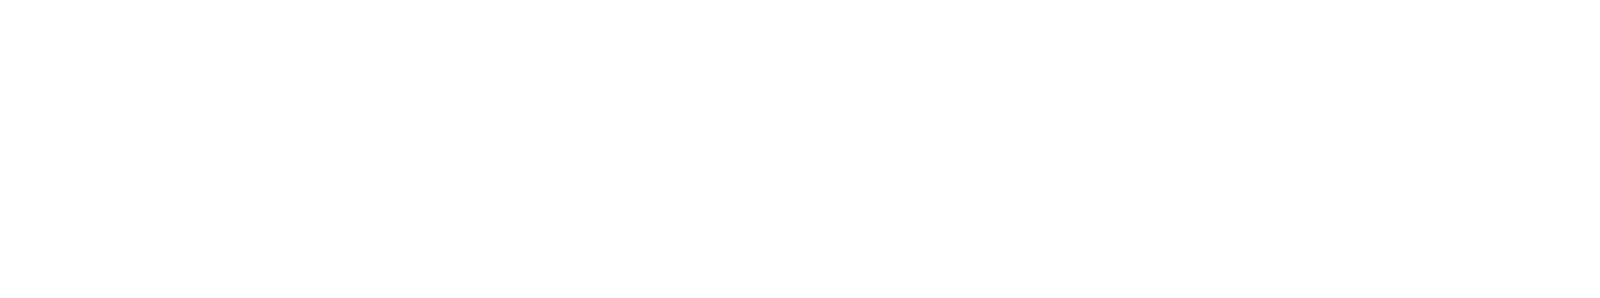 Bank of Communications Logo groß für dunkle Hintergründe (transparentes PNG)